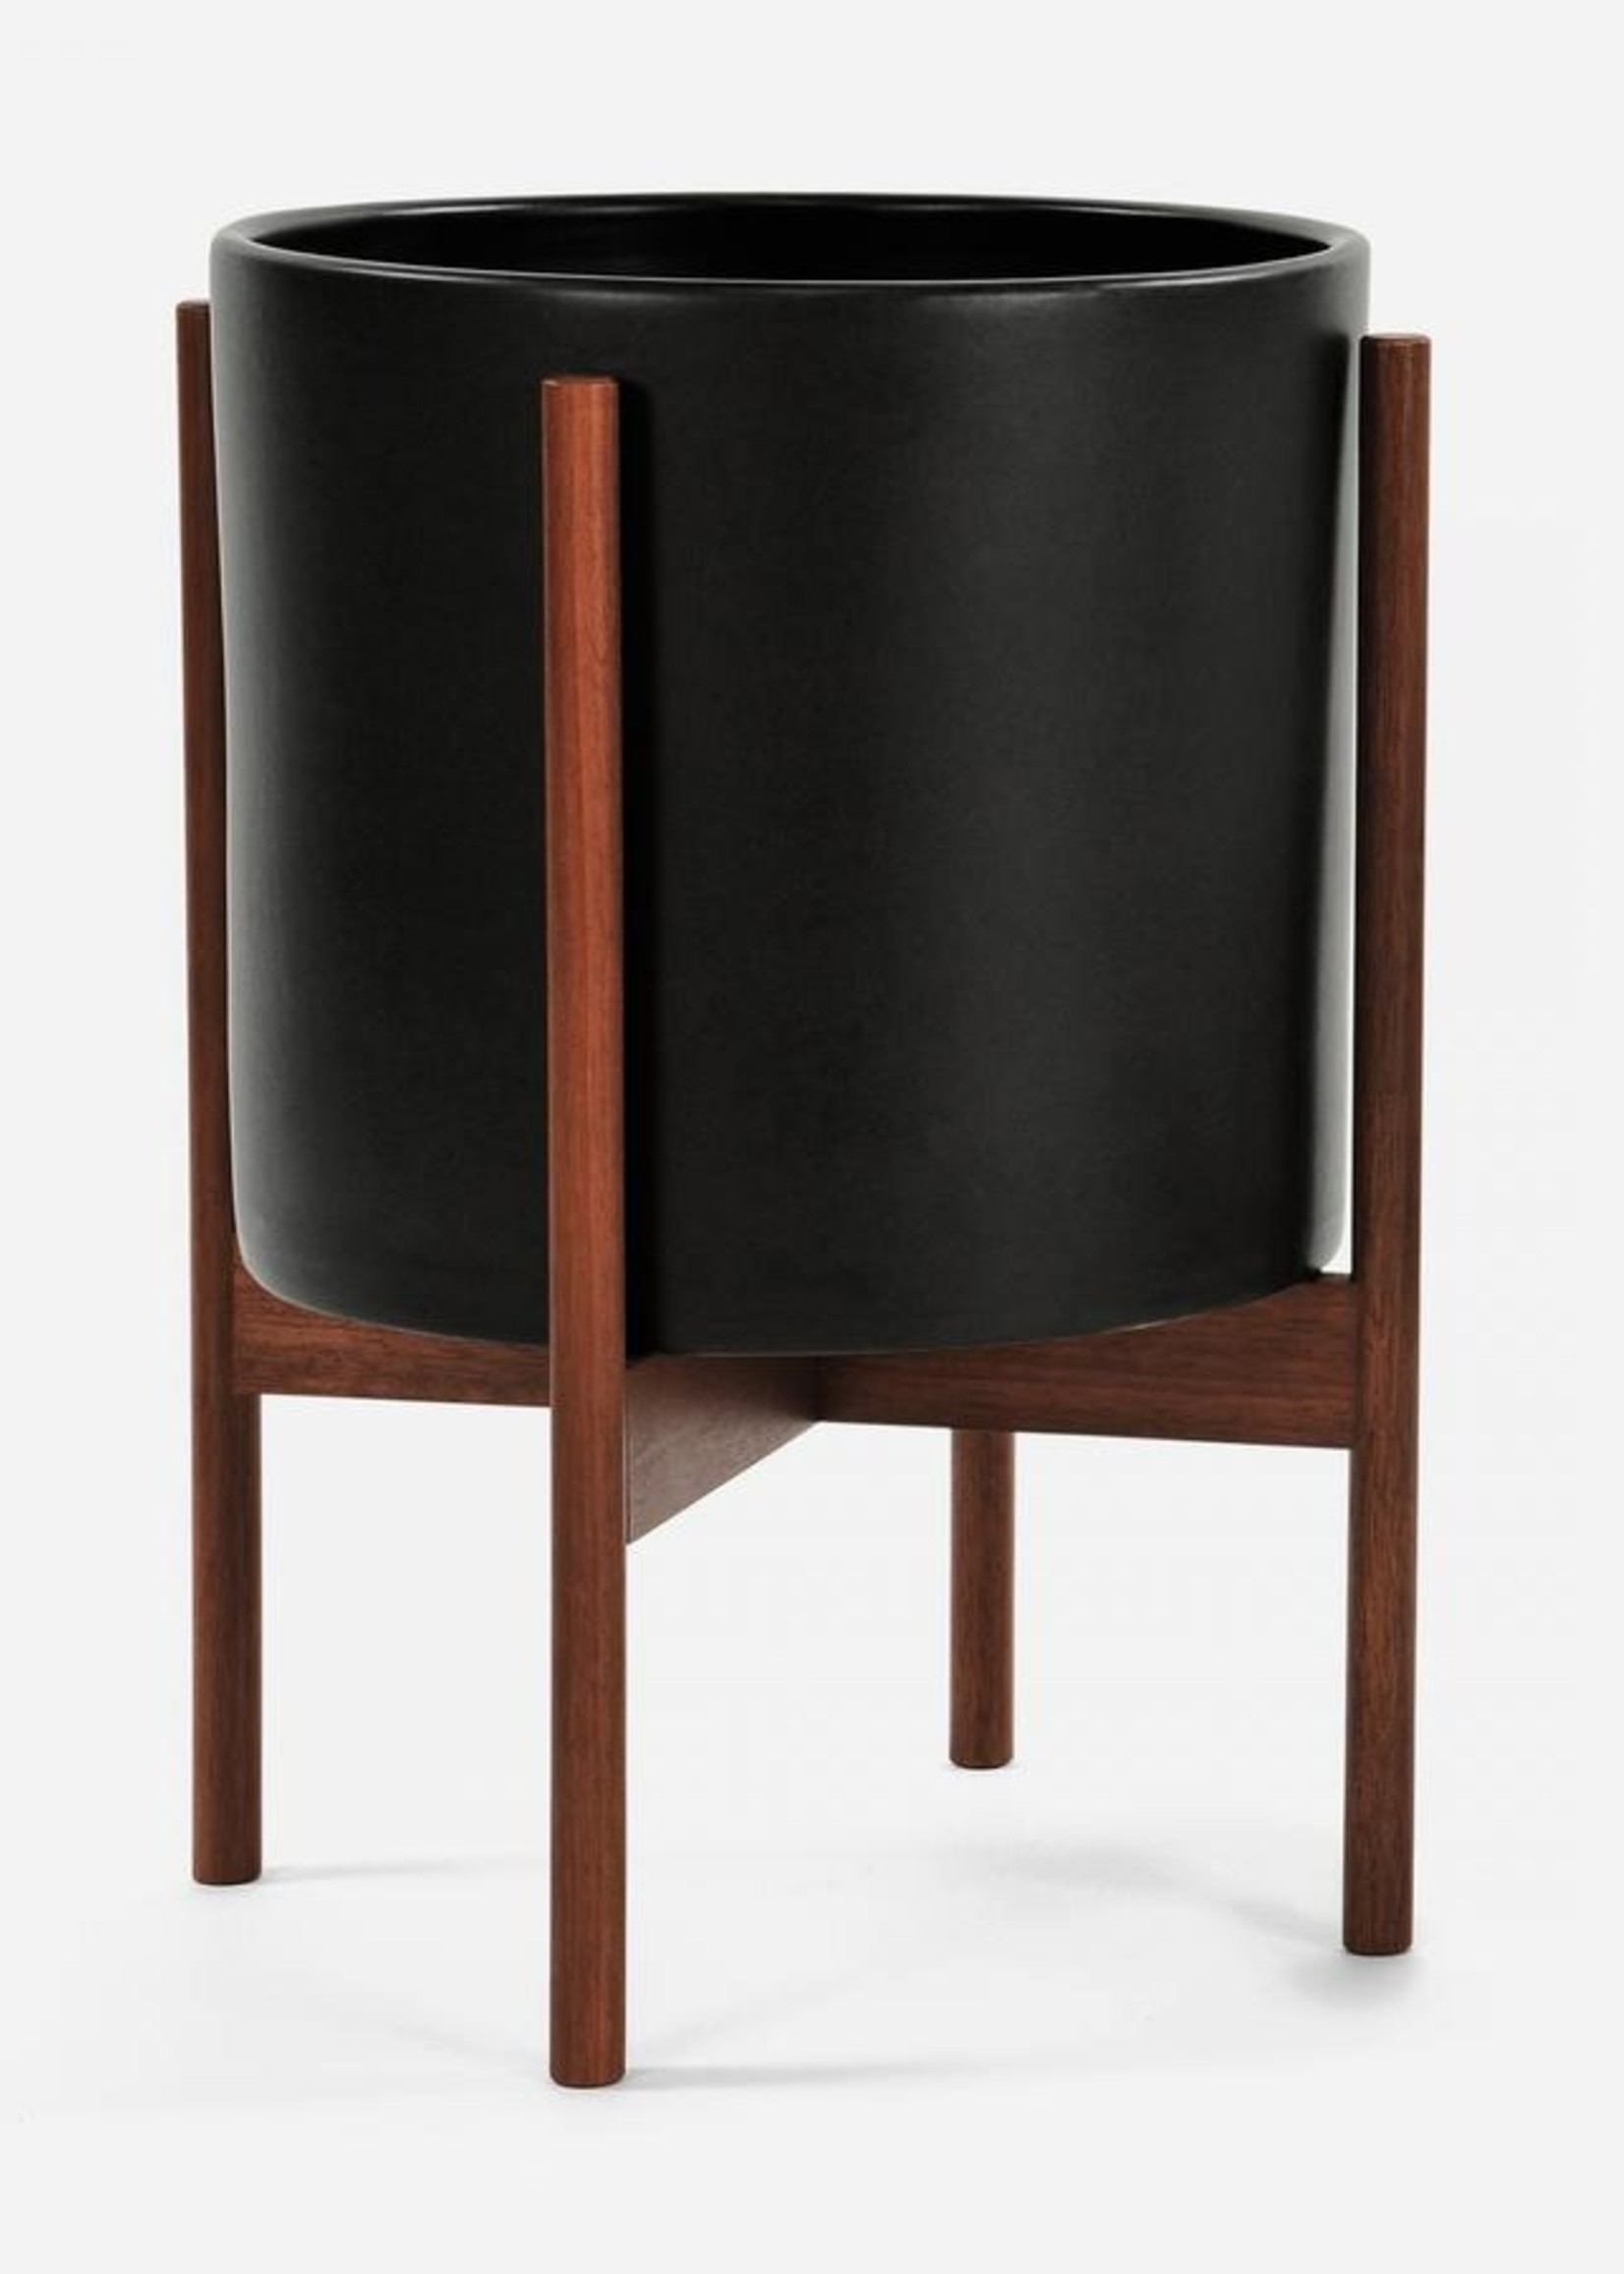 Modernica Large Cylinder w. Wood Stand - Black